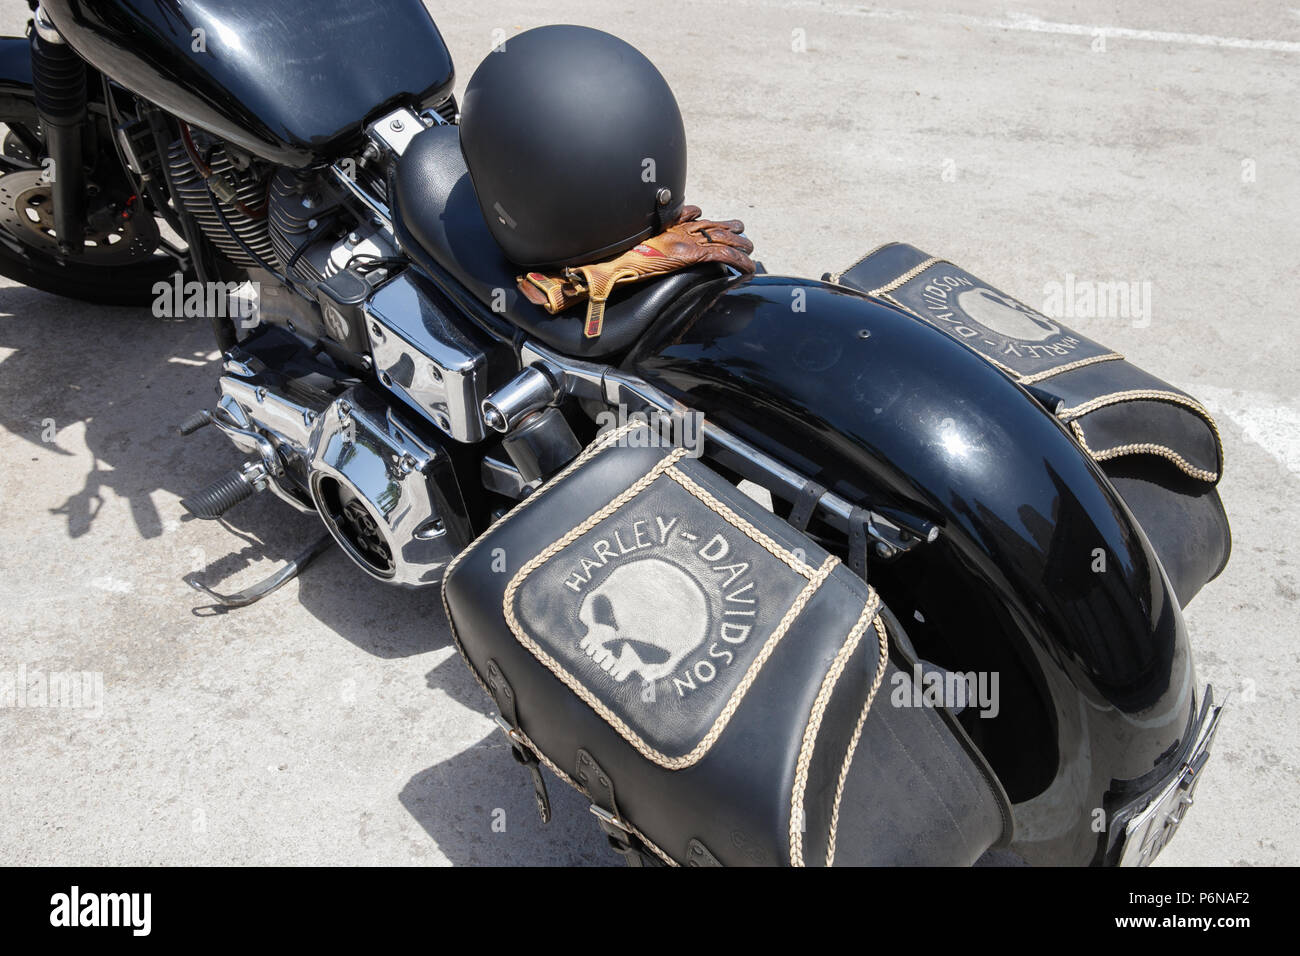 Casco de Harley Davidson Fotografía de stock - Alamy